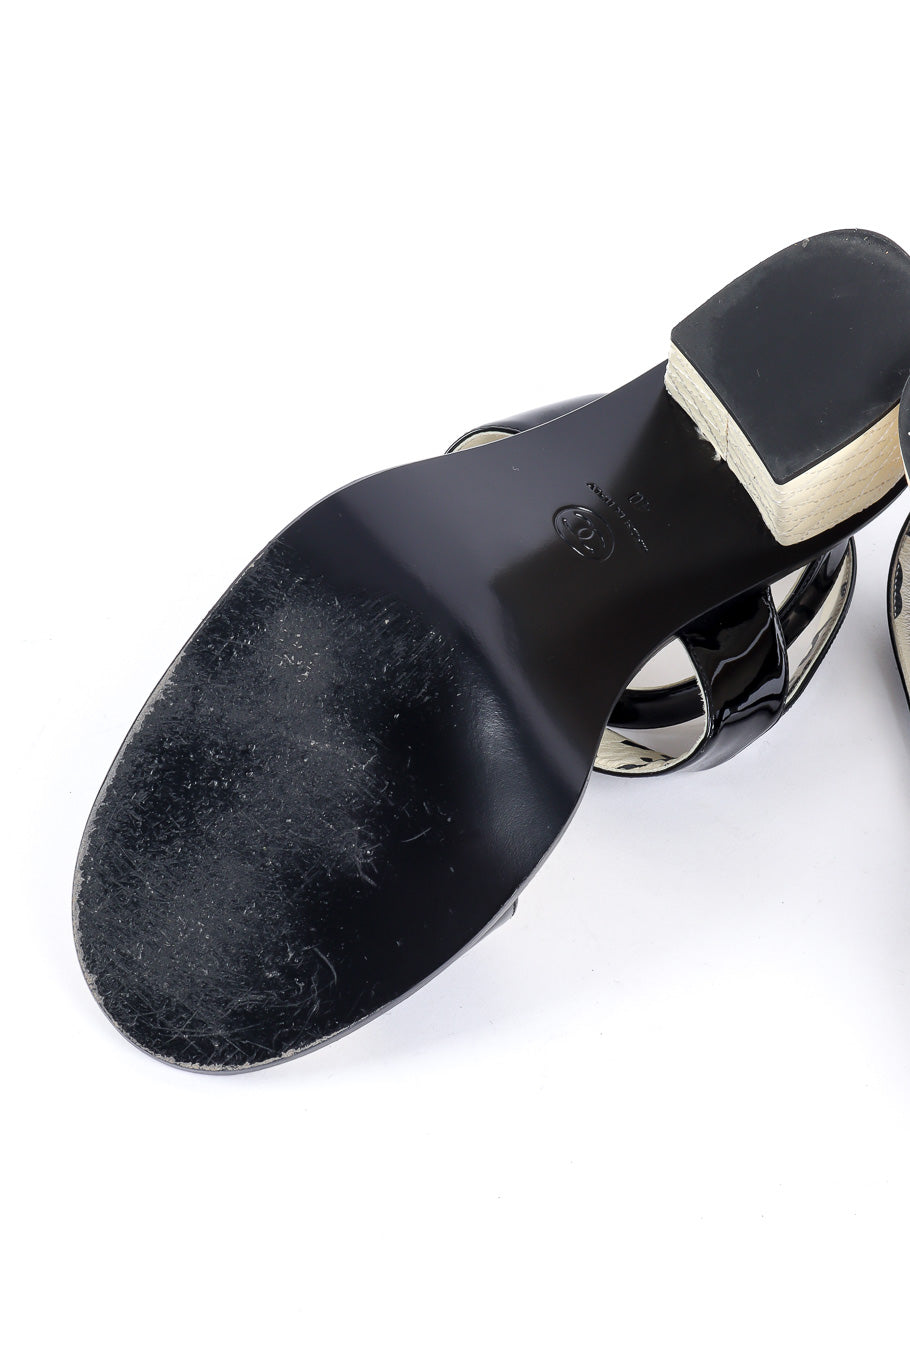 Chanel patent leather wrap sandal minimal scuffs at sole @recessla